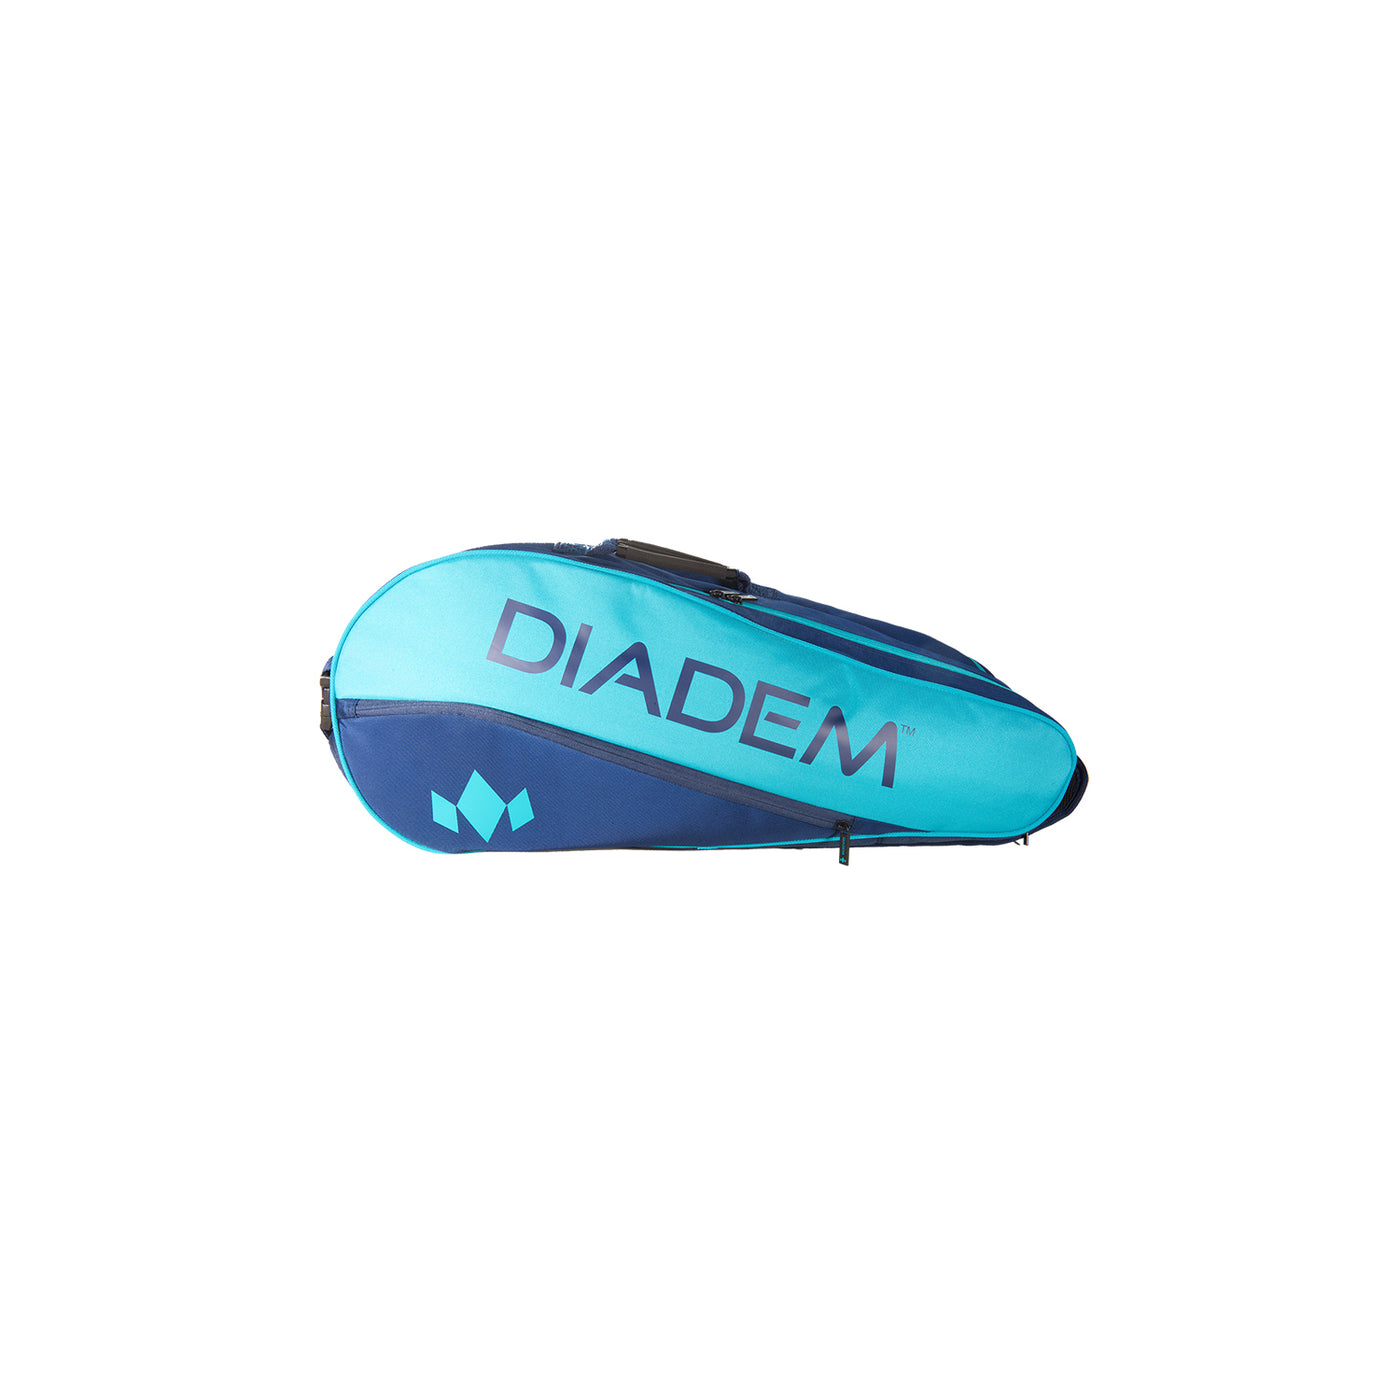 Diadem Tour 9 Pack Elevate Racket Bag (Teal/Navy) - Diadem Sports